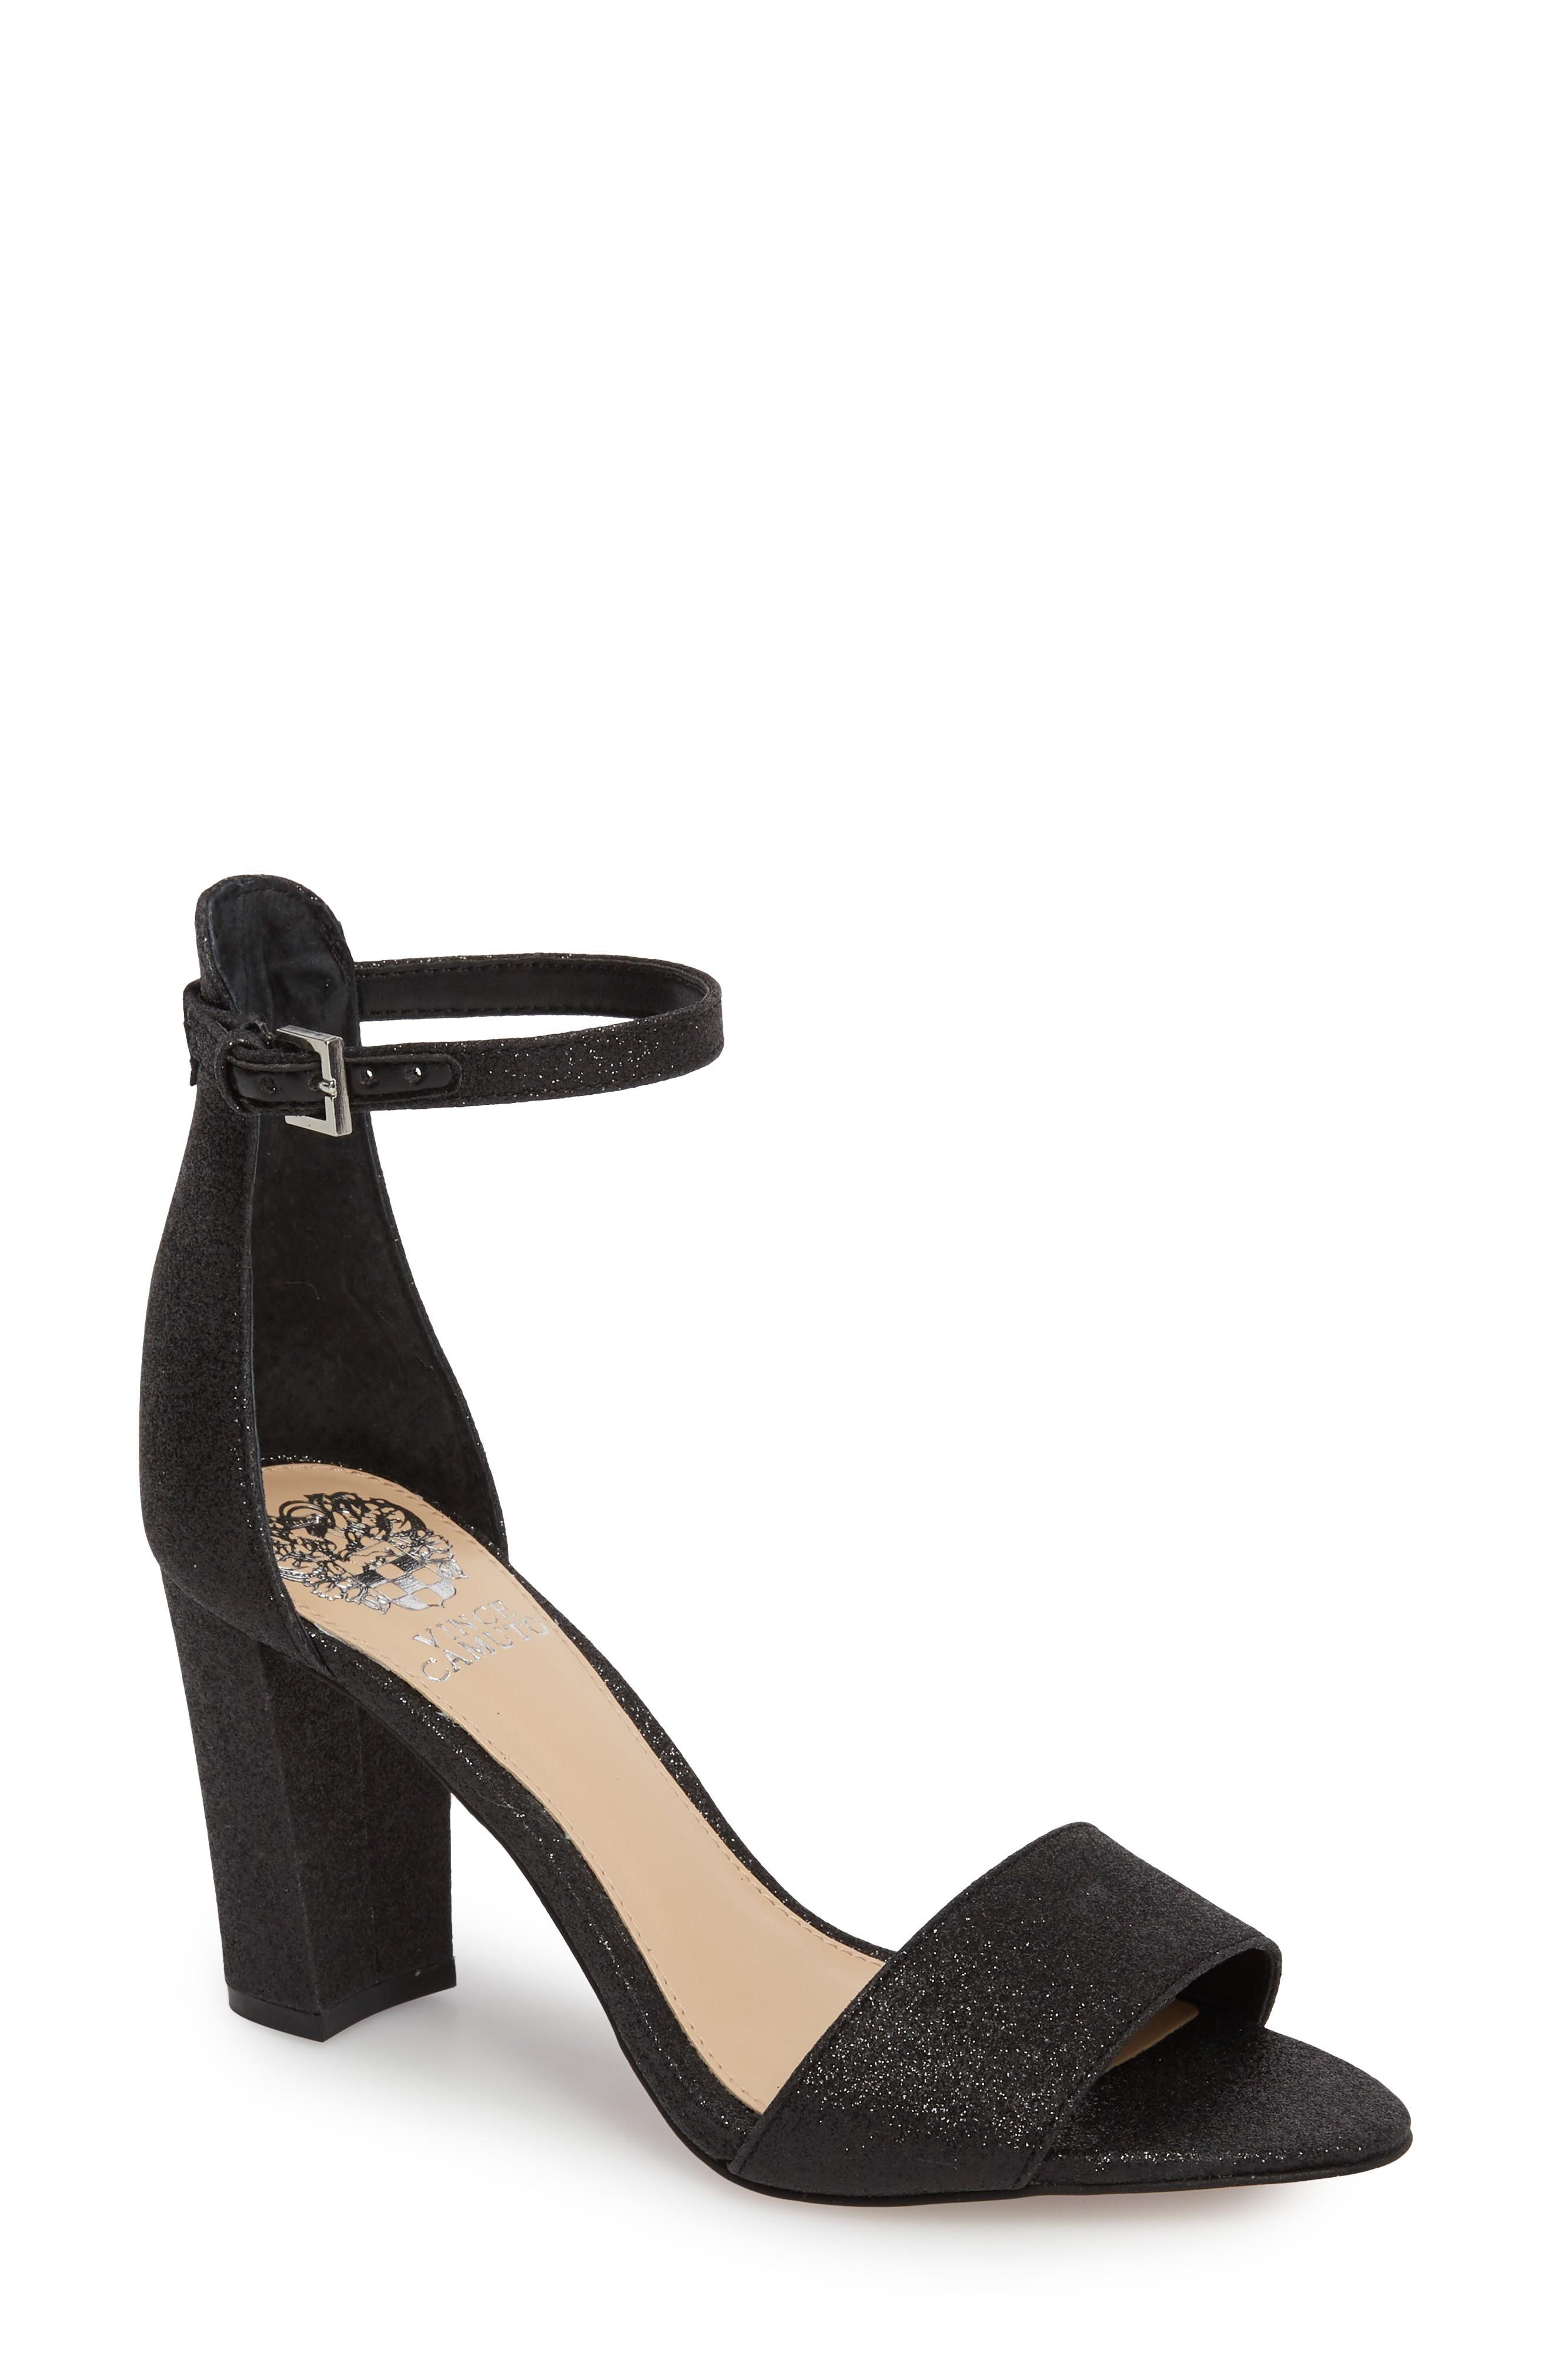 Vince Camuto Corlina Ankle Strap Sandal In Black Glitter Fabric | ModeSens